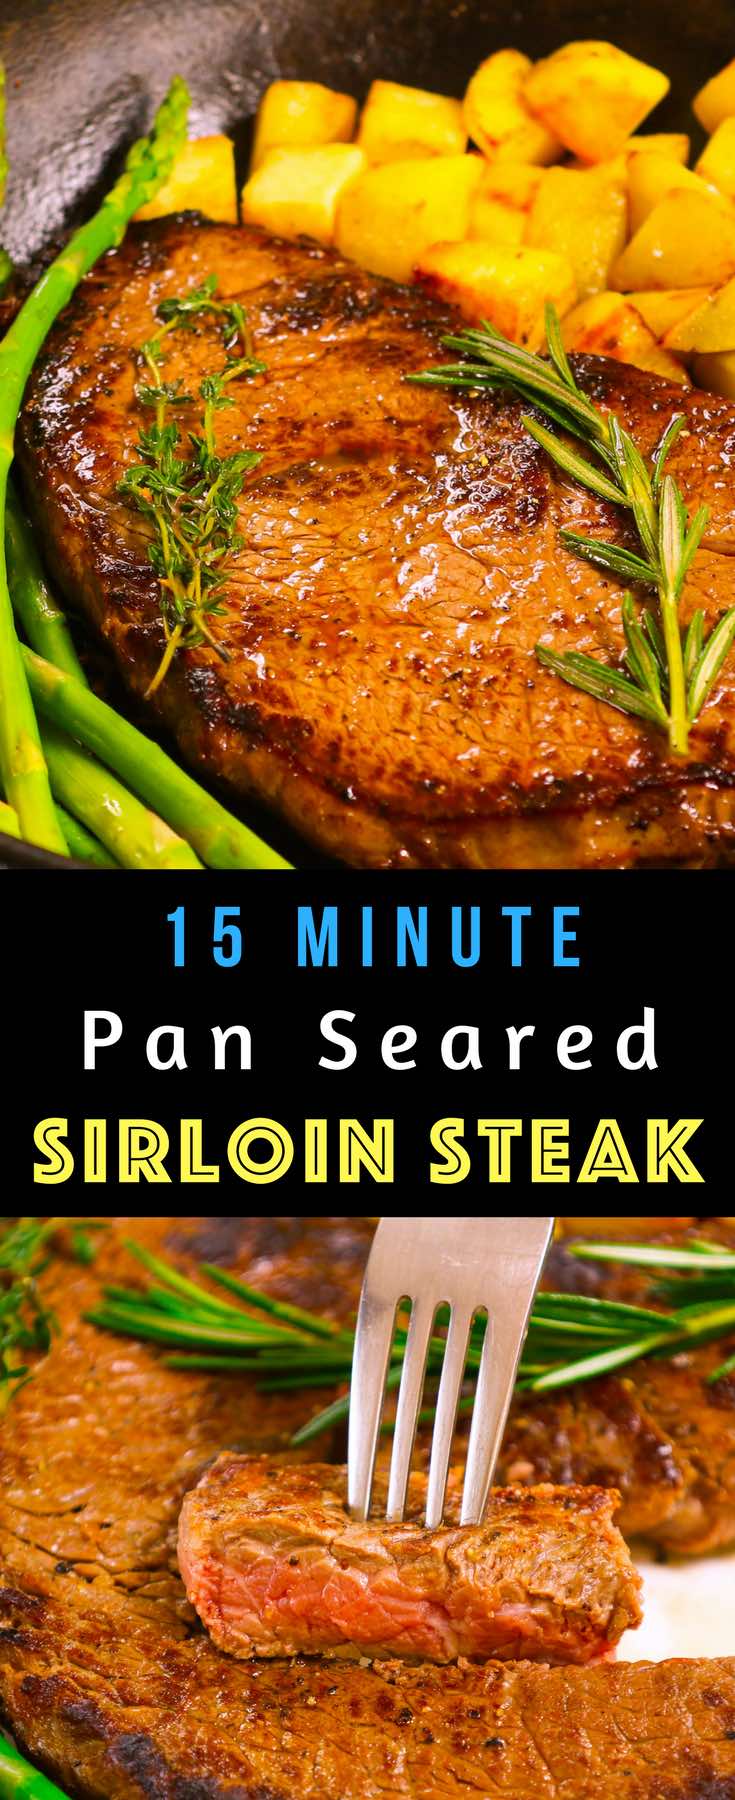 Pan Seared Sirloin Steak - TipBuzz